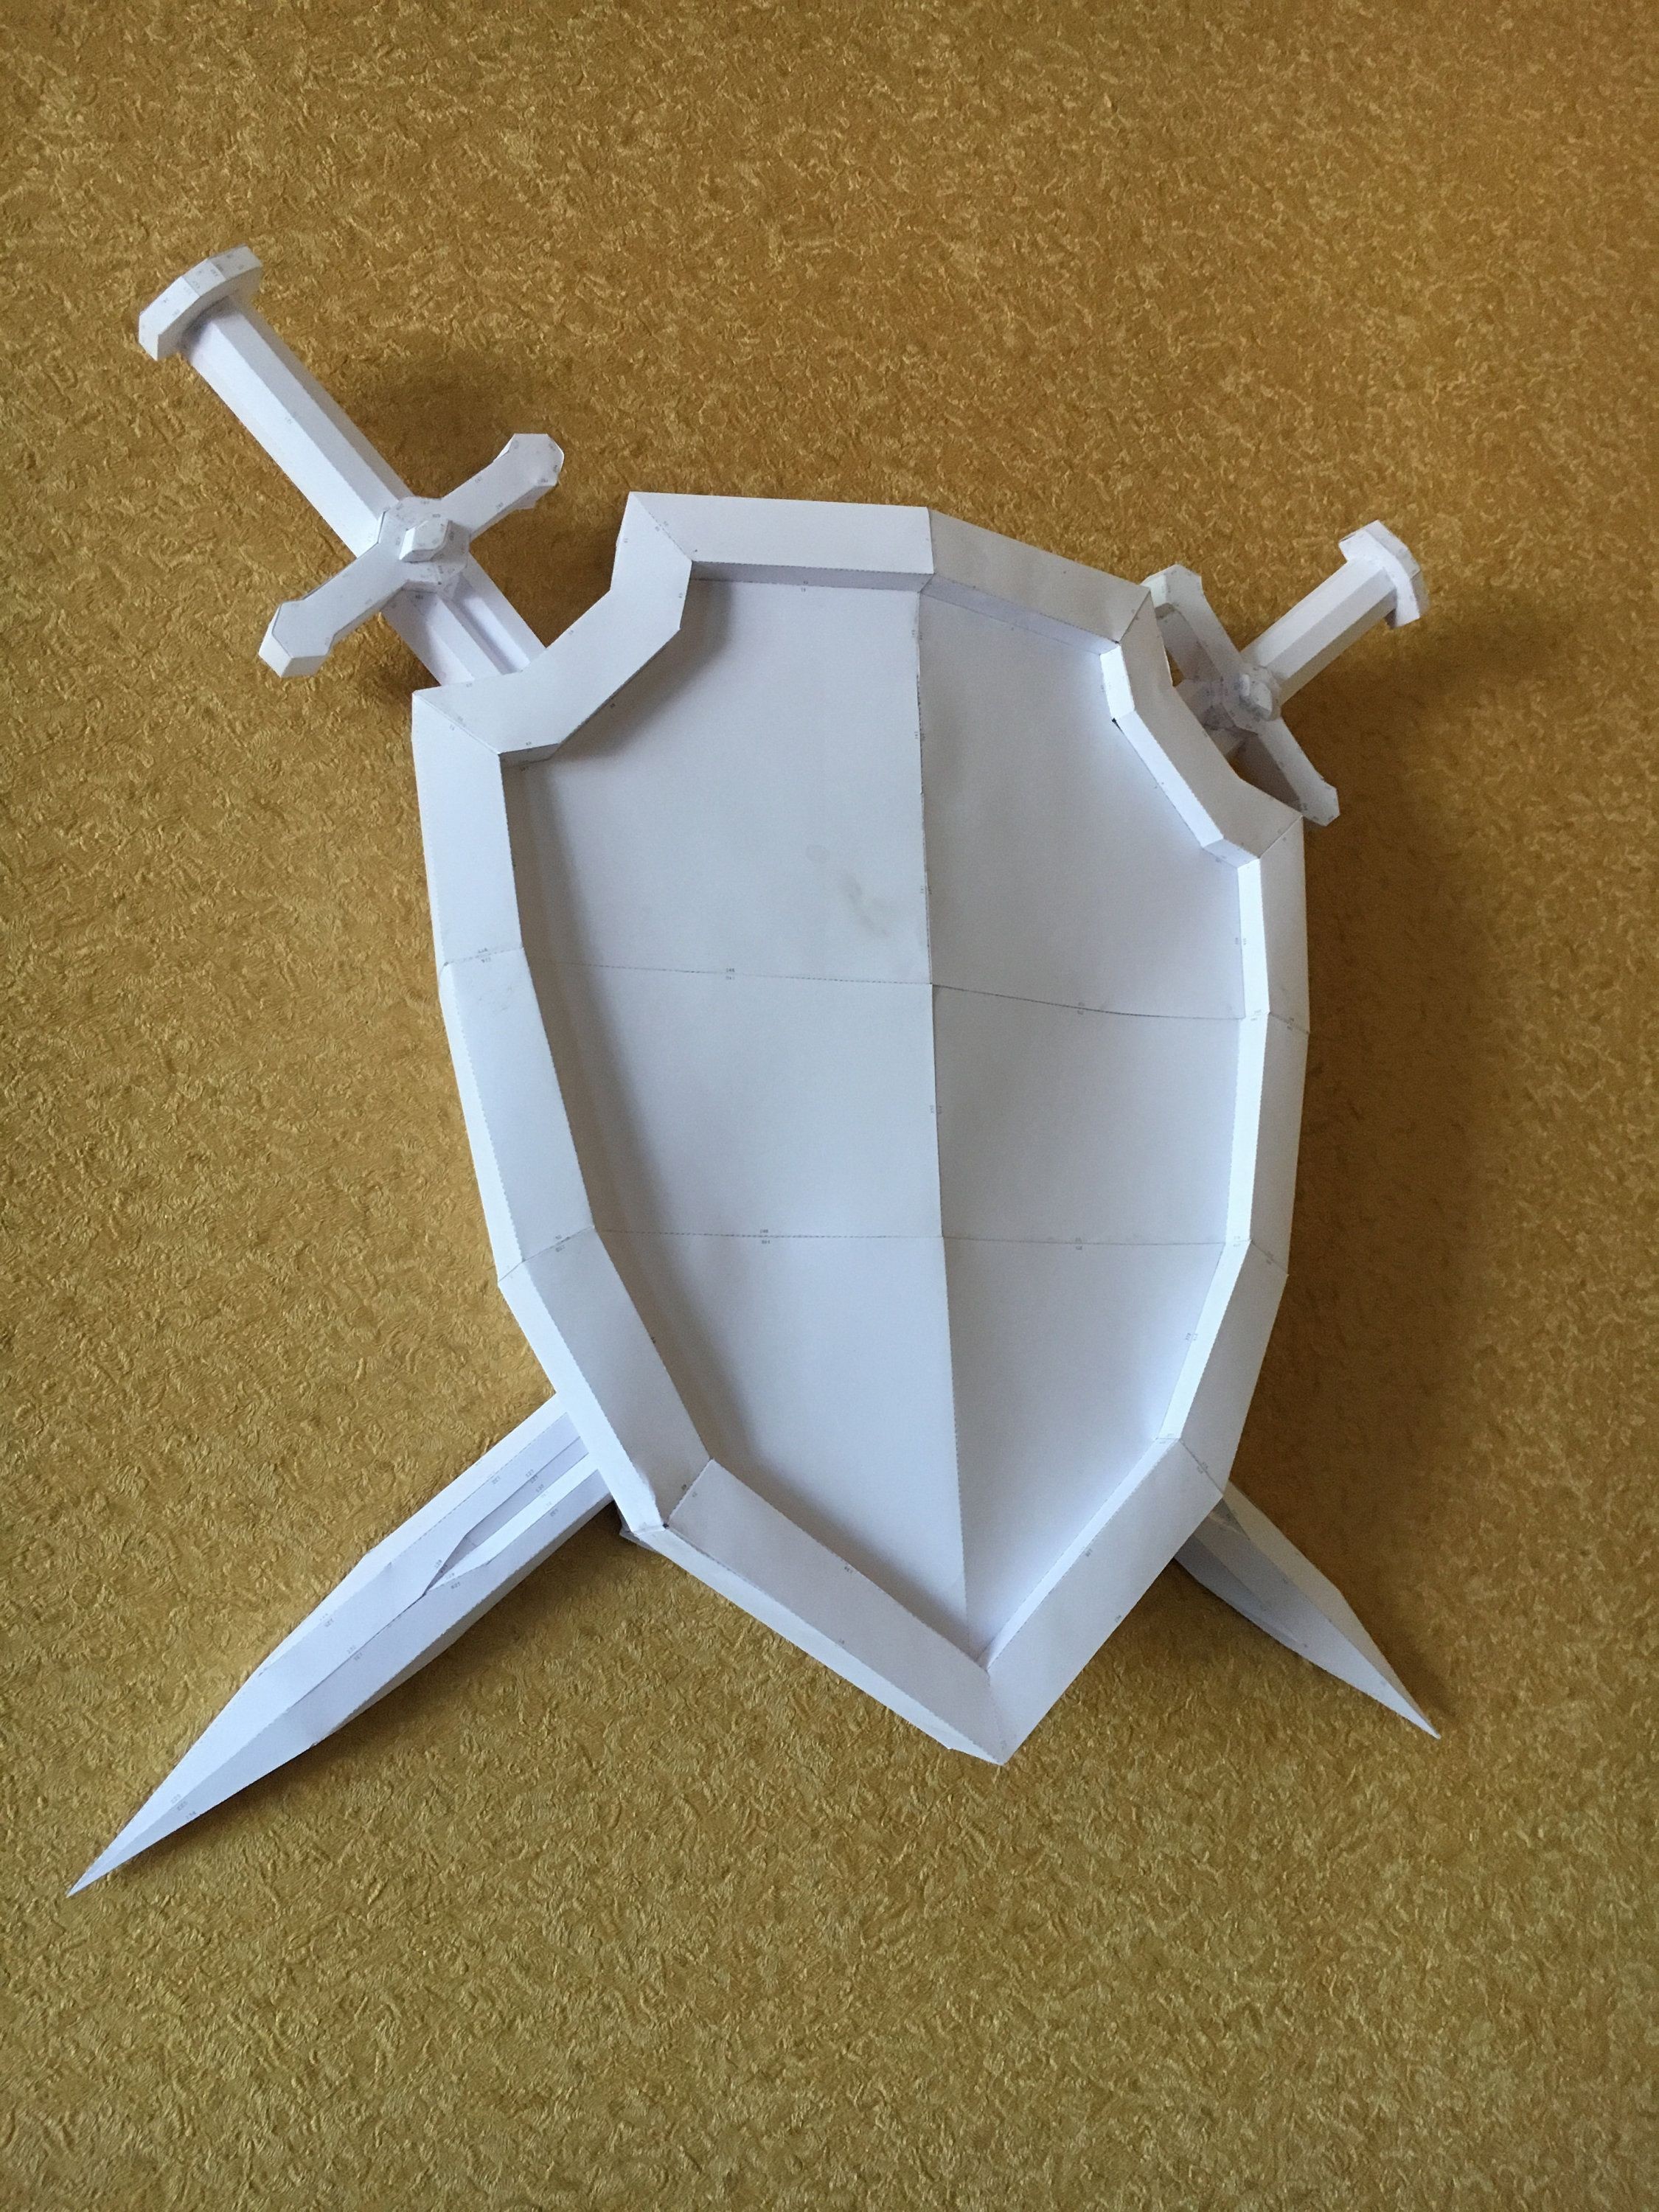 Shark Papercraft Sword Shield Diy Papercraft Model ÐÑÐ¼Ð°Ð¶Ð½ÑÐµ Ð¸Ð·Ð´ÐµÐ Ð¸Ñ